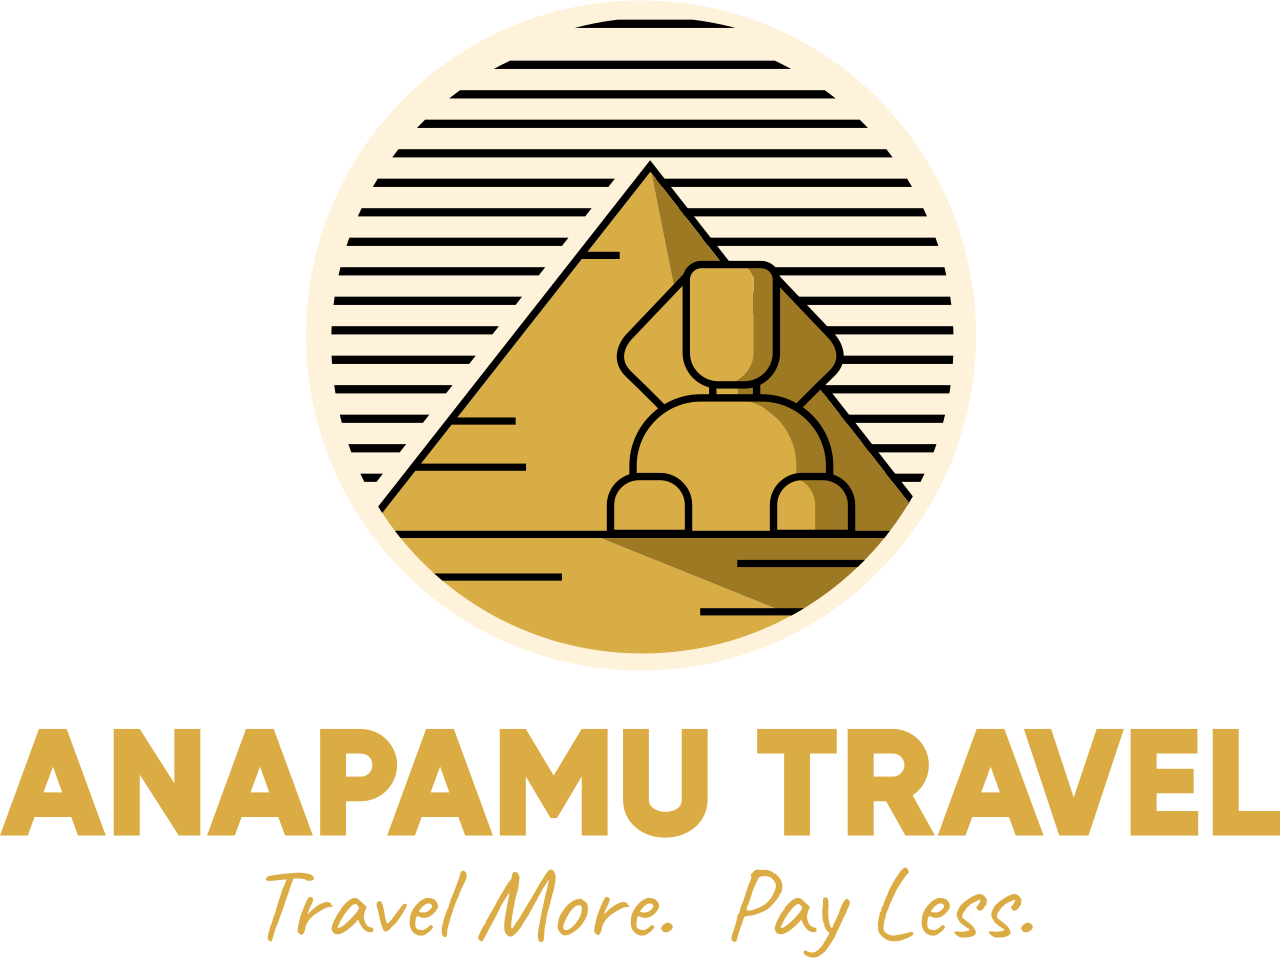 Anapamu Travel's logo